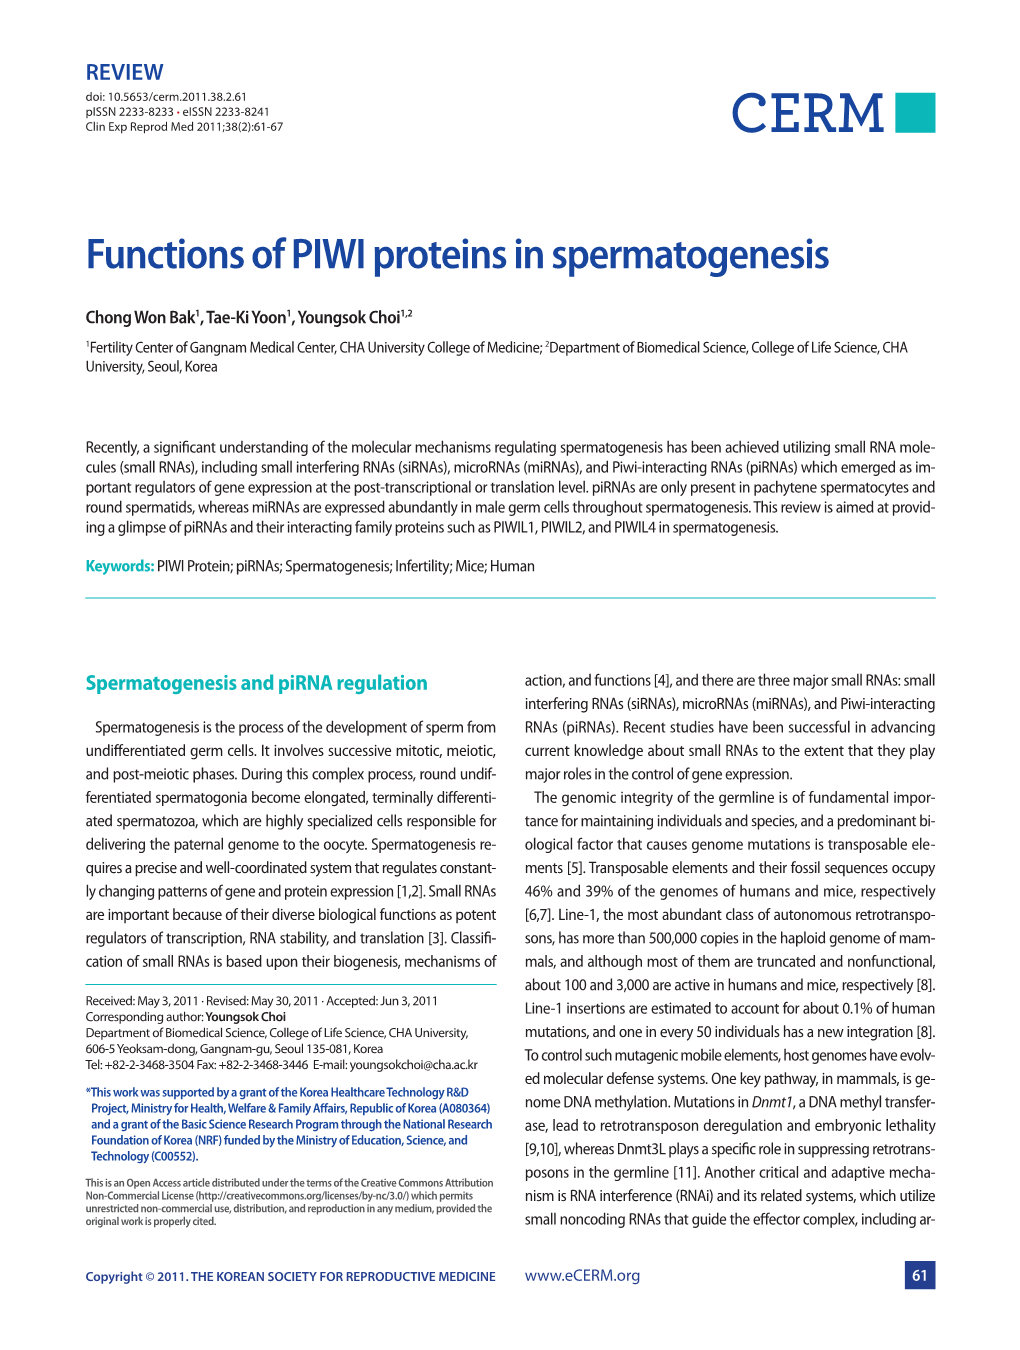 Functions of PIWI Proteins in Spermatogenesis